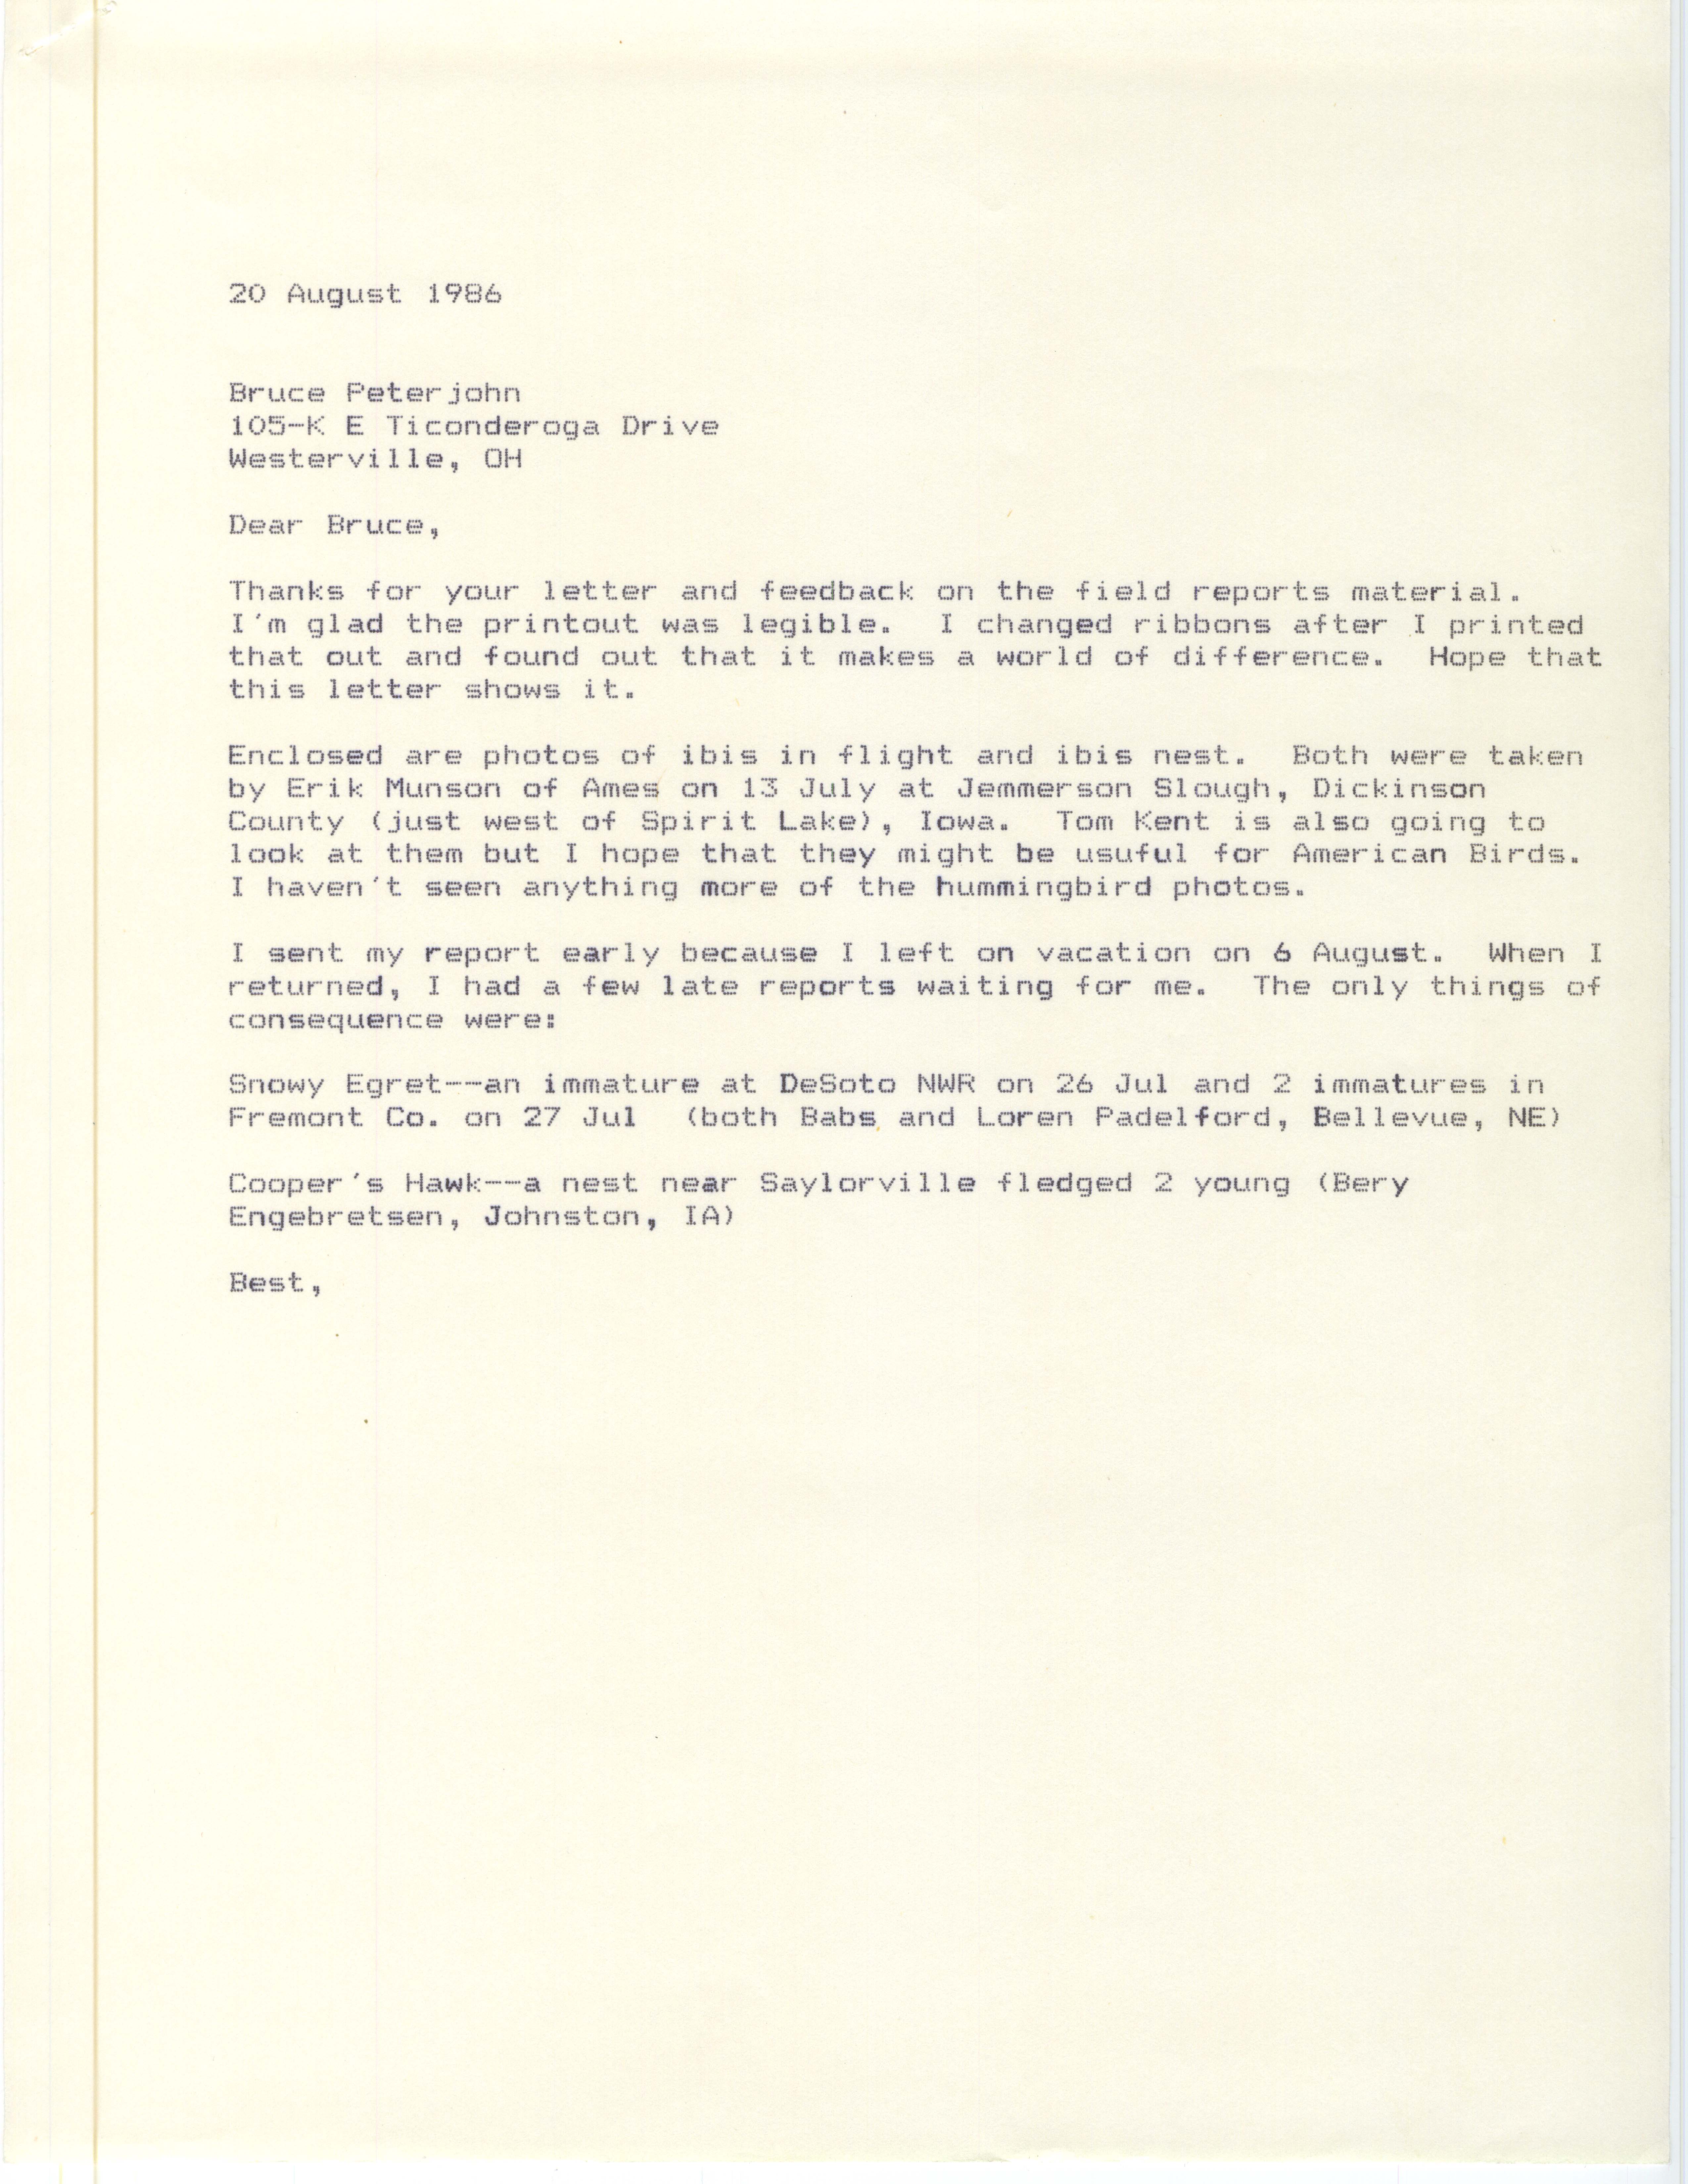 James J. Dinsmore letter to Bruce G. Peterjohn regarding bird sightings, August 20 1986 